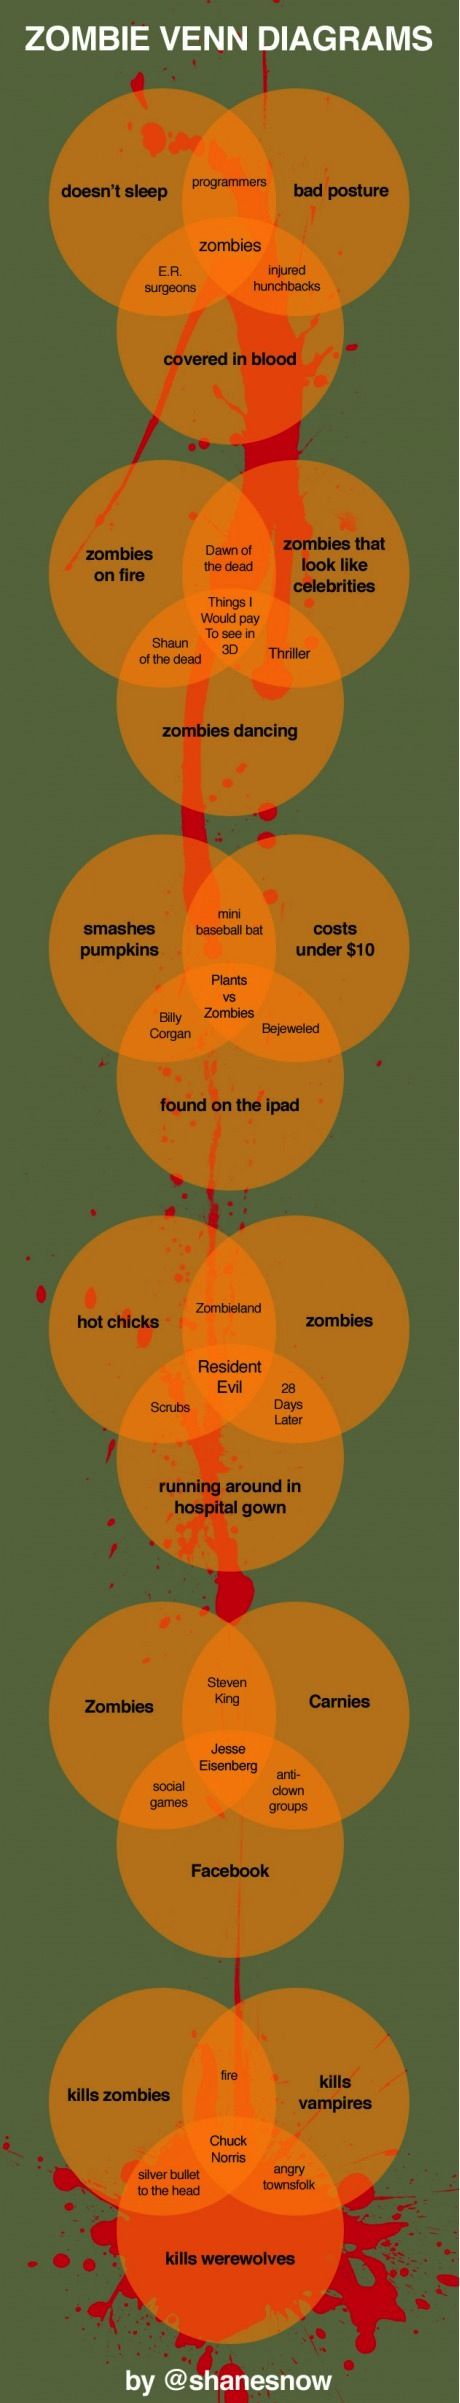 Zombie Venn Diagrams.